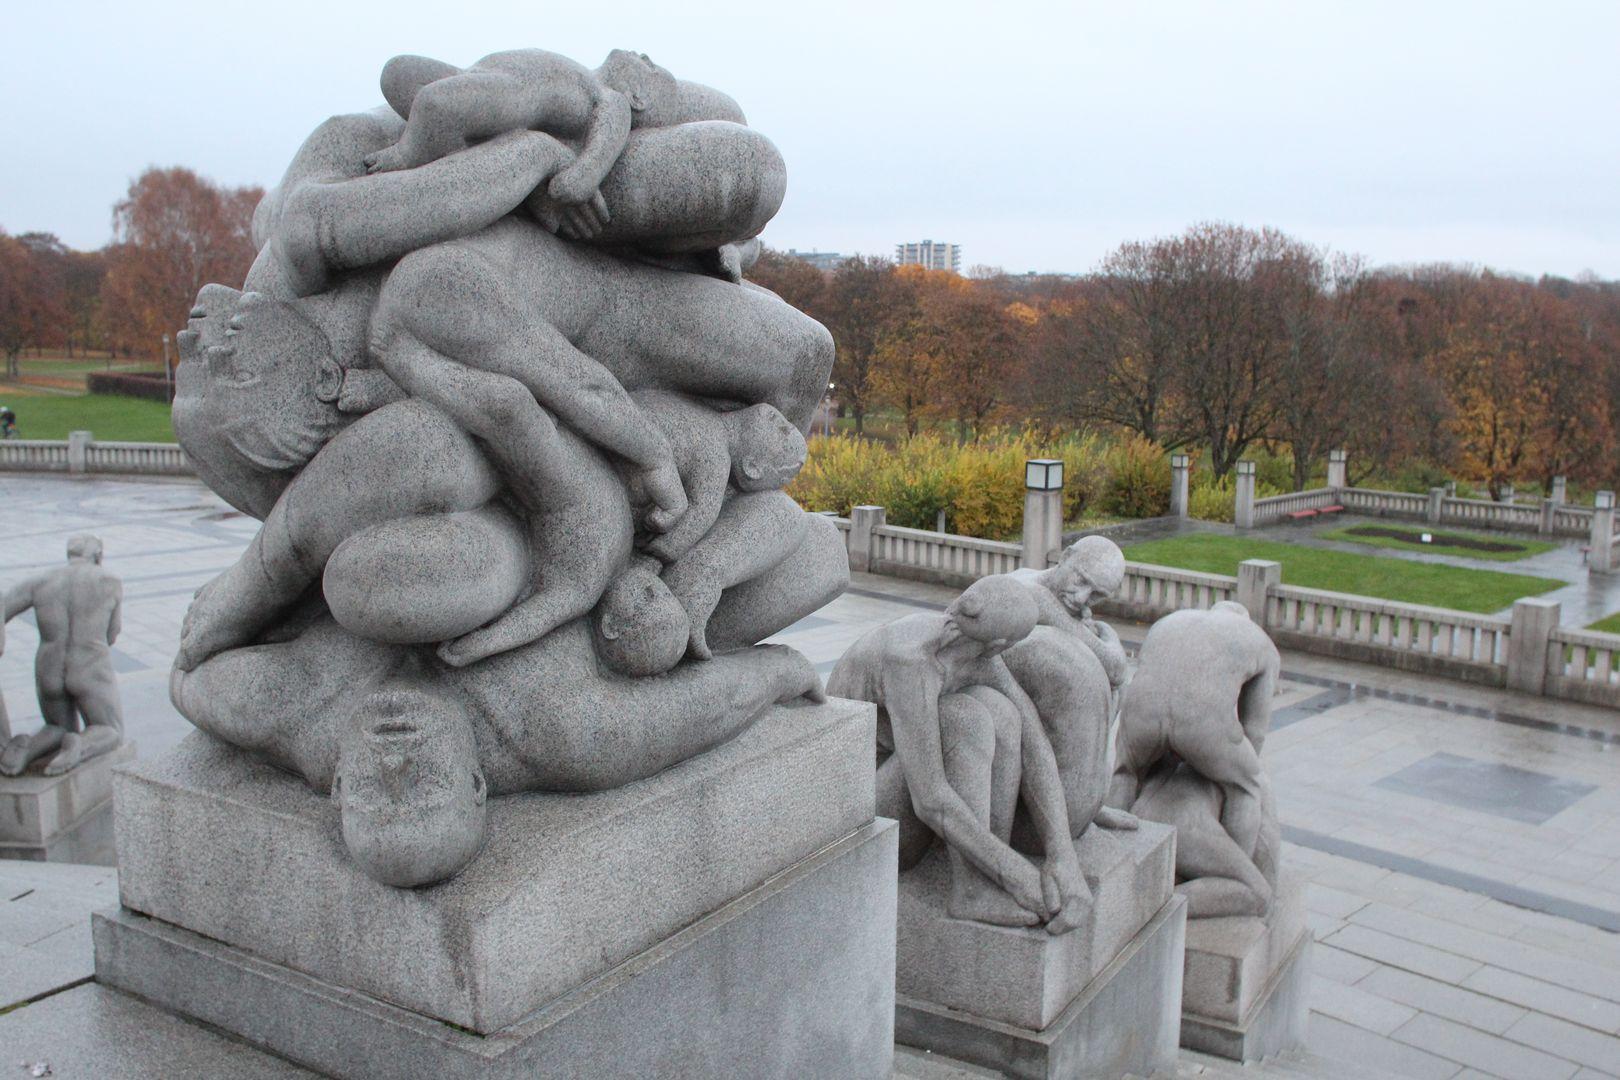 осло скульптуры в парке